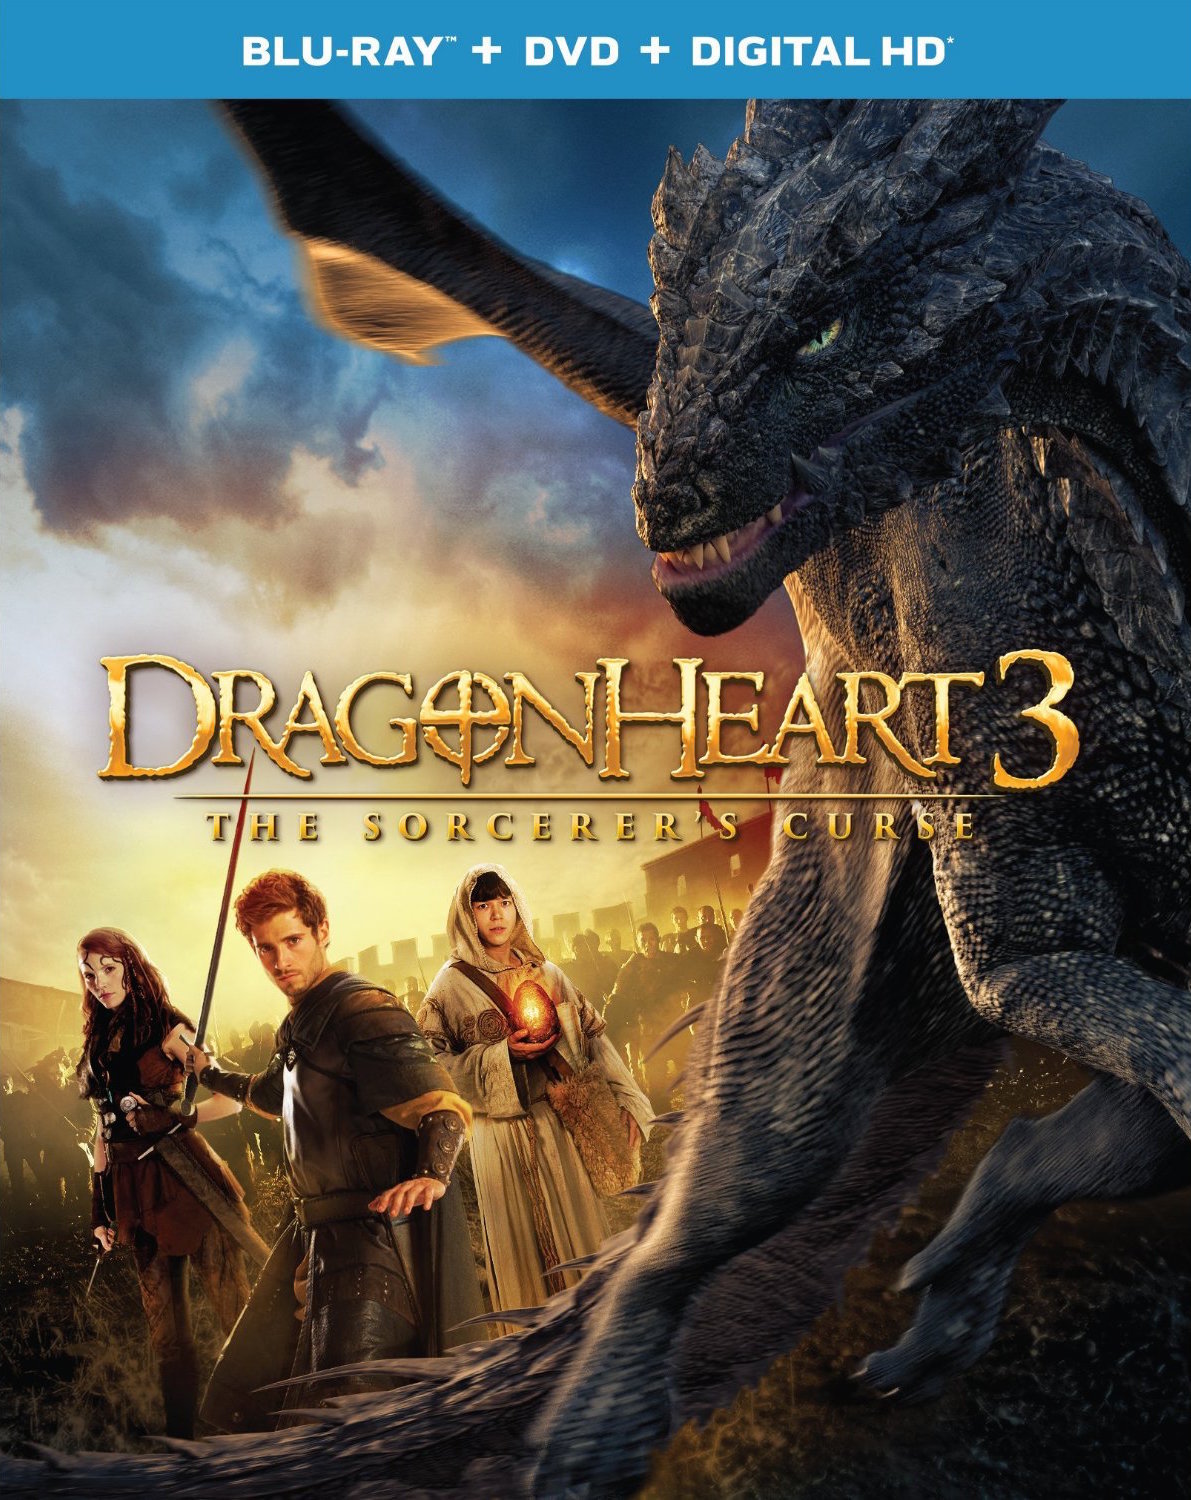 Dragon Heart 3 Blu-ray Review